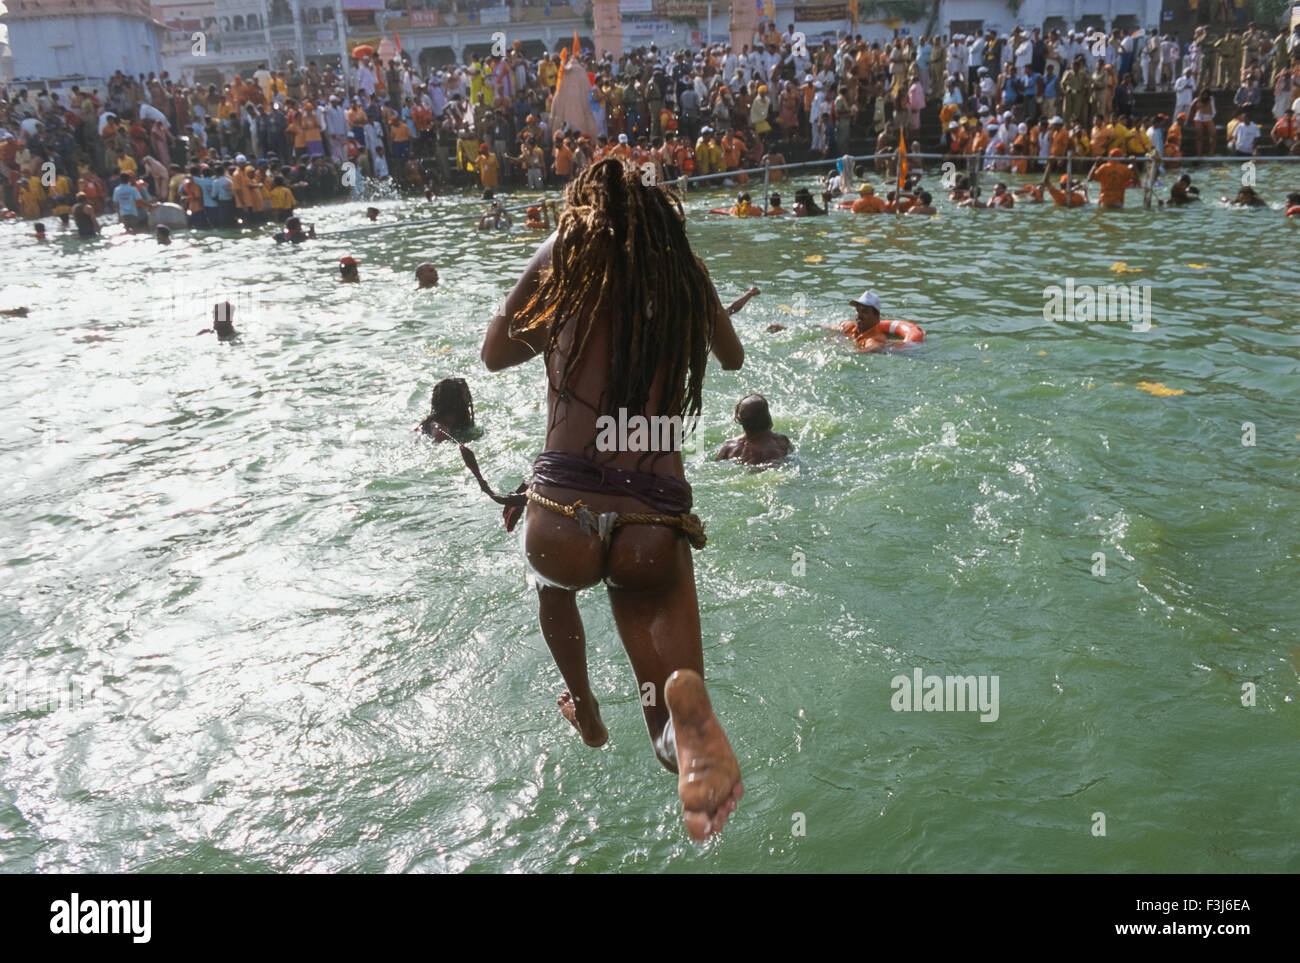 Naga (naked) sadhu jumping into the Shipra River, on the Shai Snan bathing day, Simhastha Kumbh Mela 2004, Ujjain, Madhya Pradesh, India Stock Photo